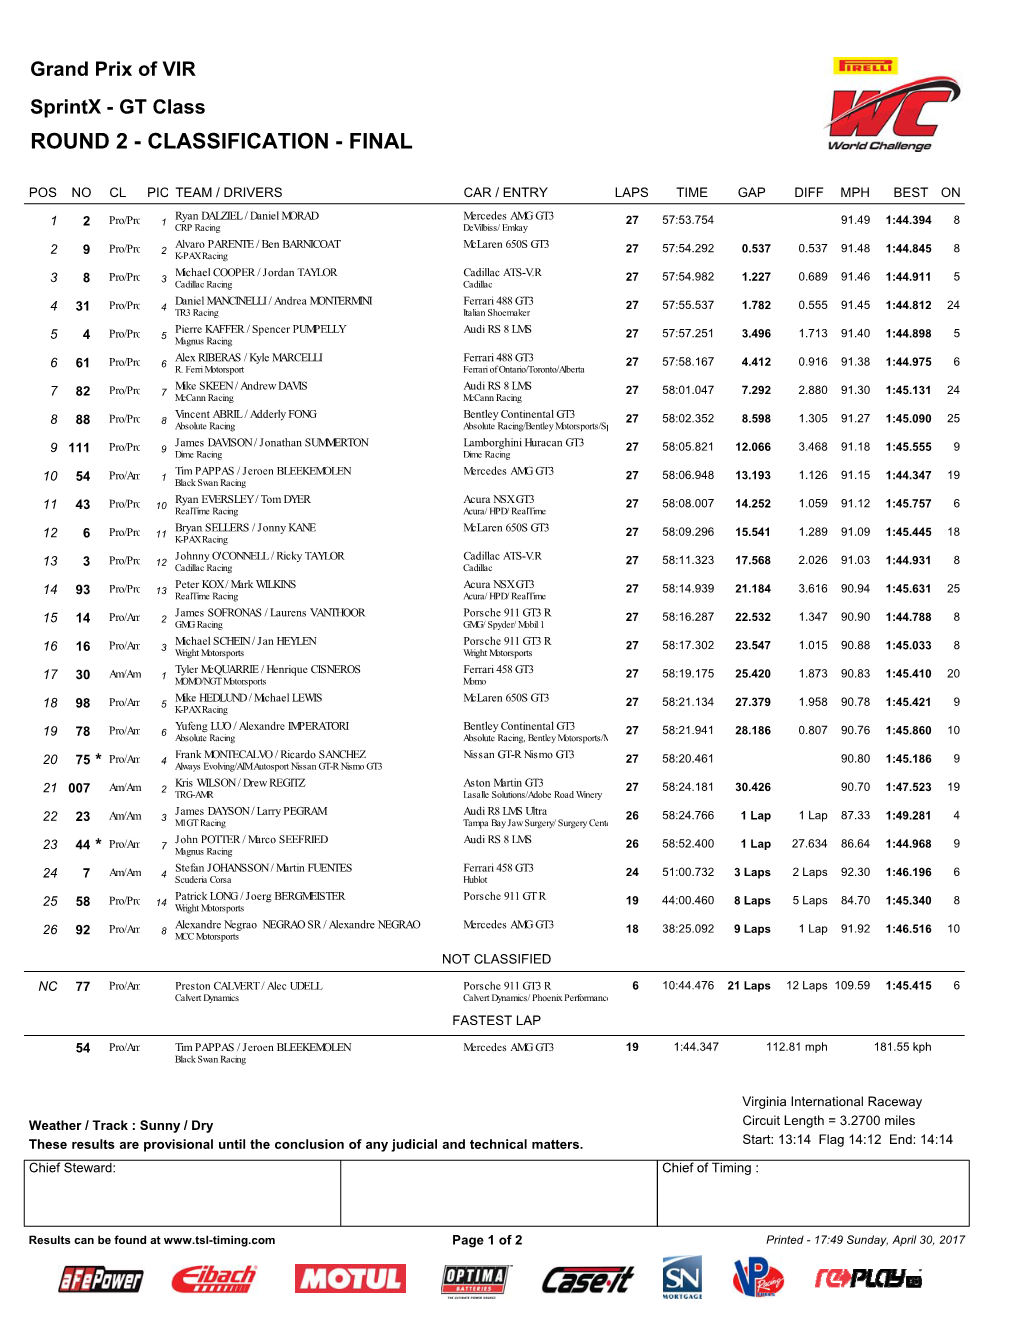 Sprintx Race 2 Classification